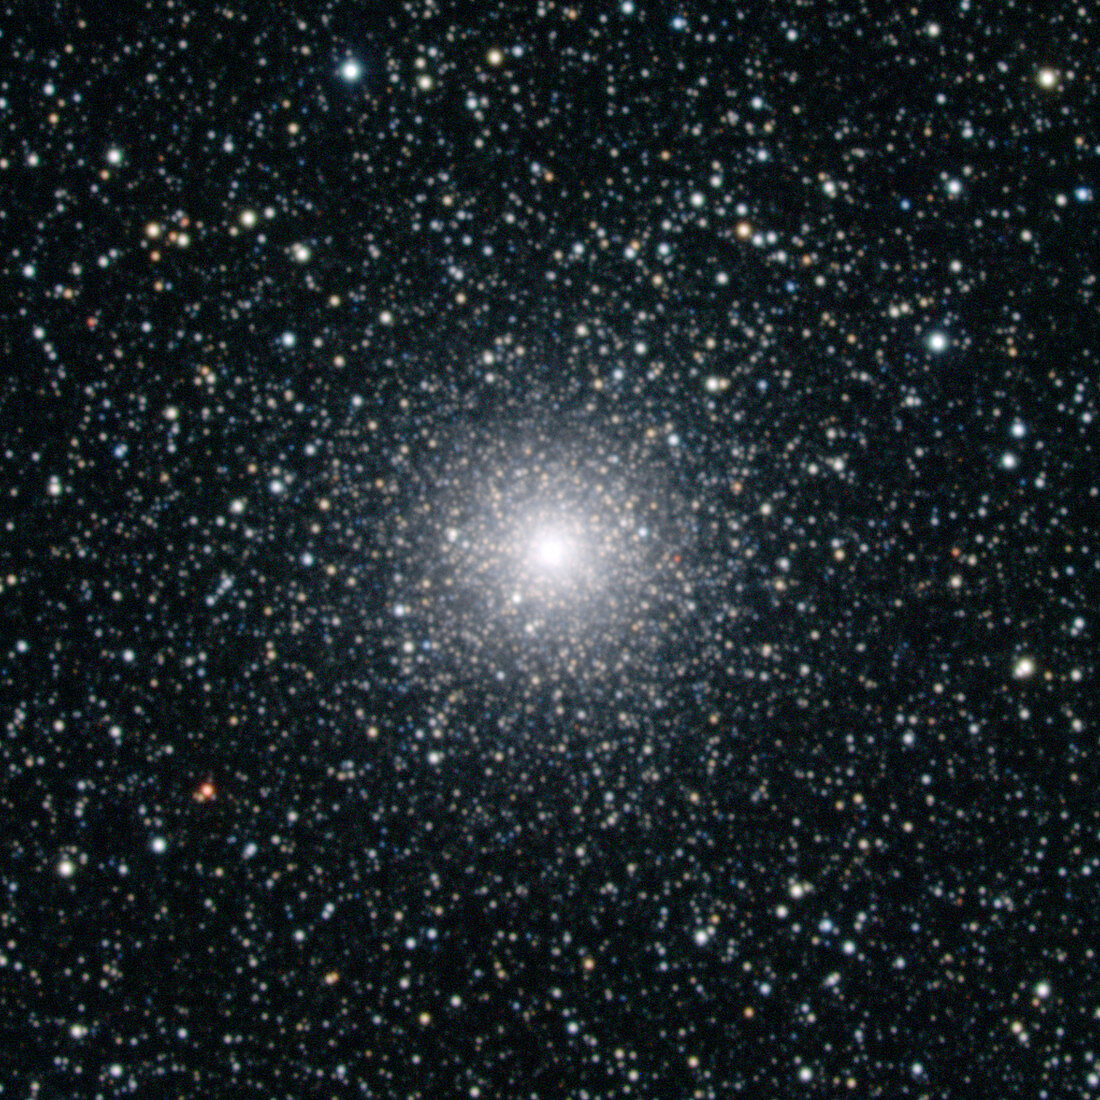 Globular cluster M54